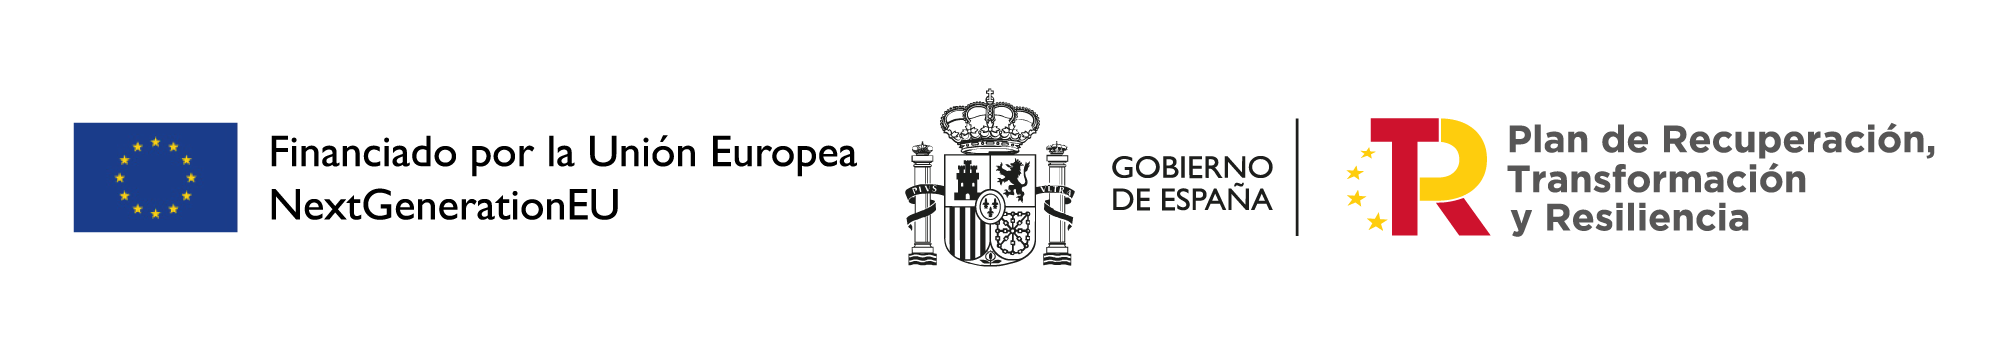 Logos Union Europea y Gobierno España